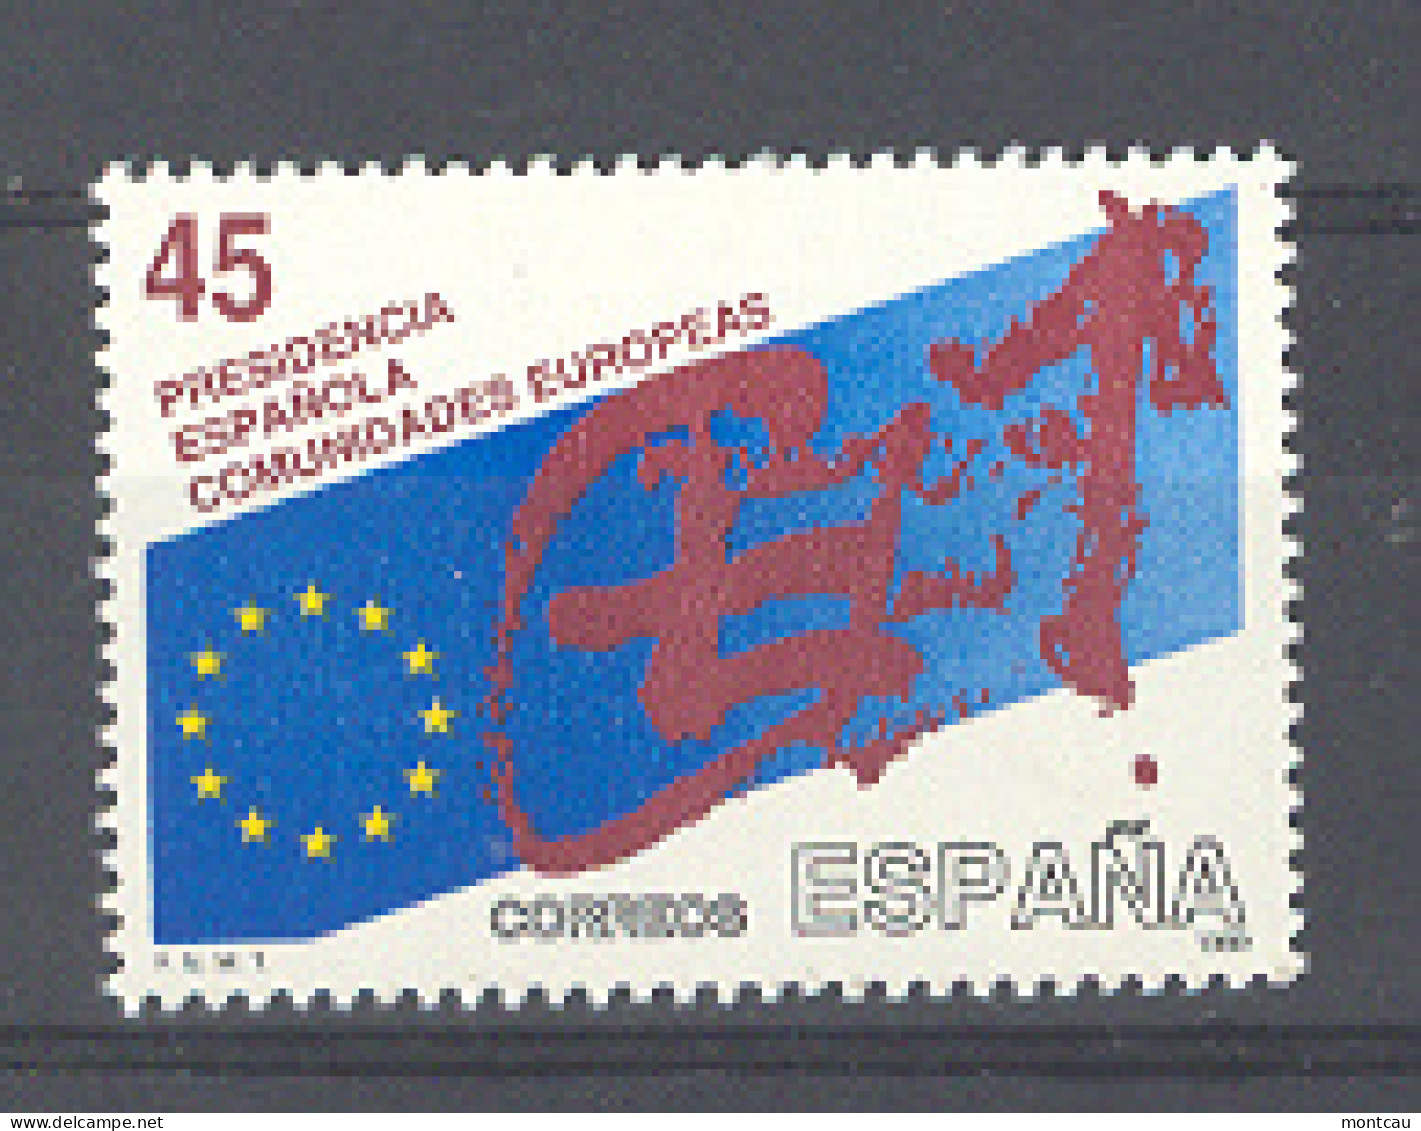 Spain 1989 - Presidencia CEE Ed 3010 (**) - Nuovi